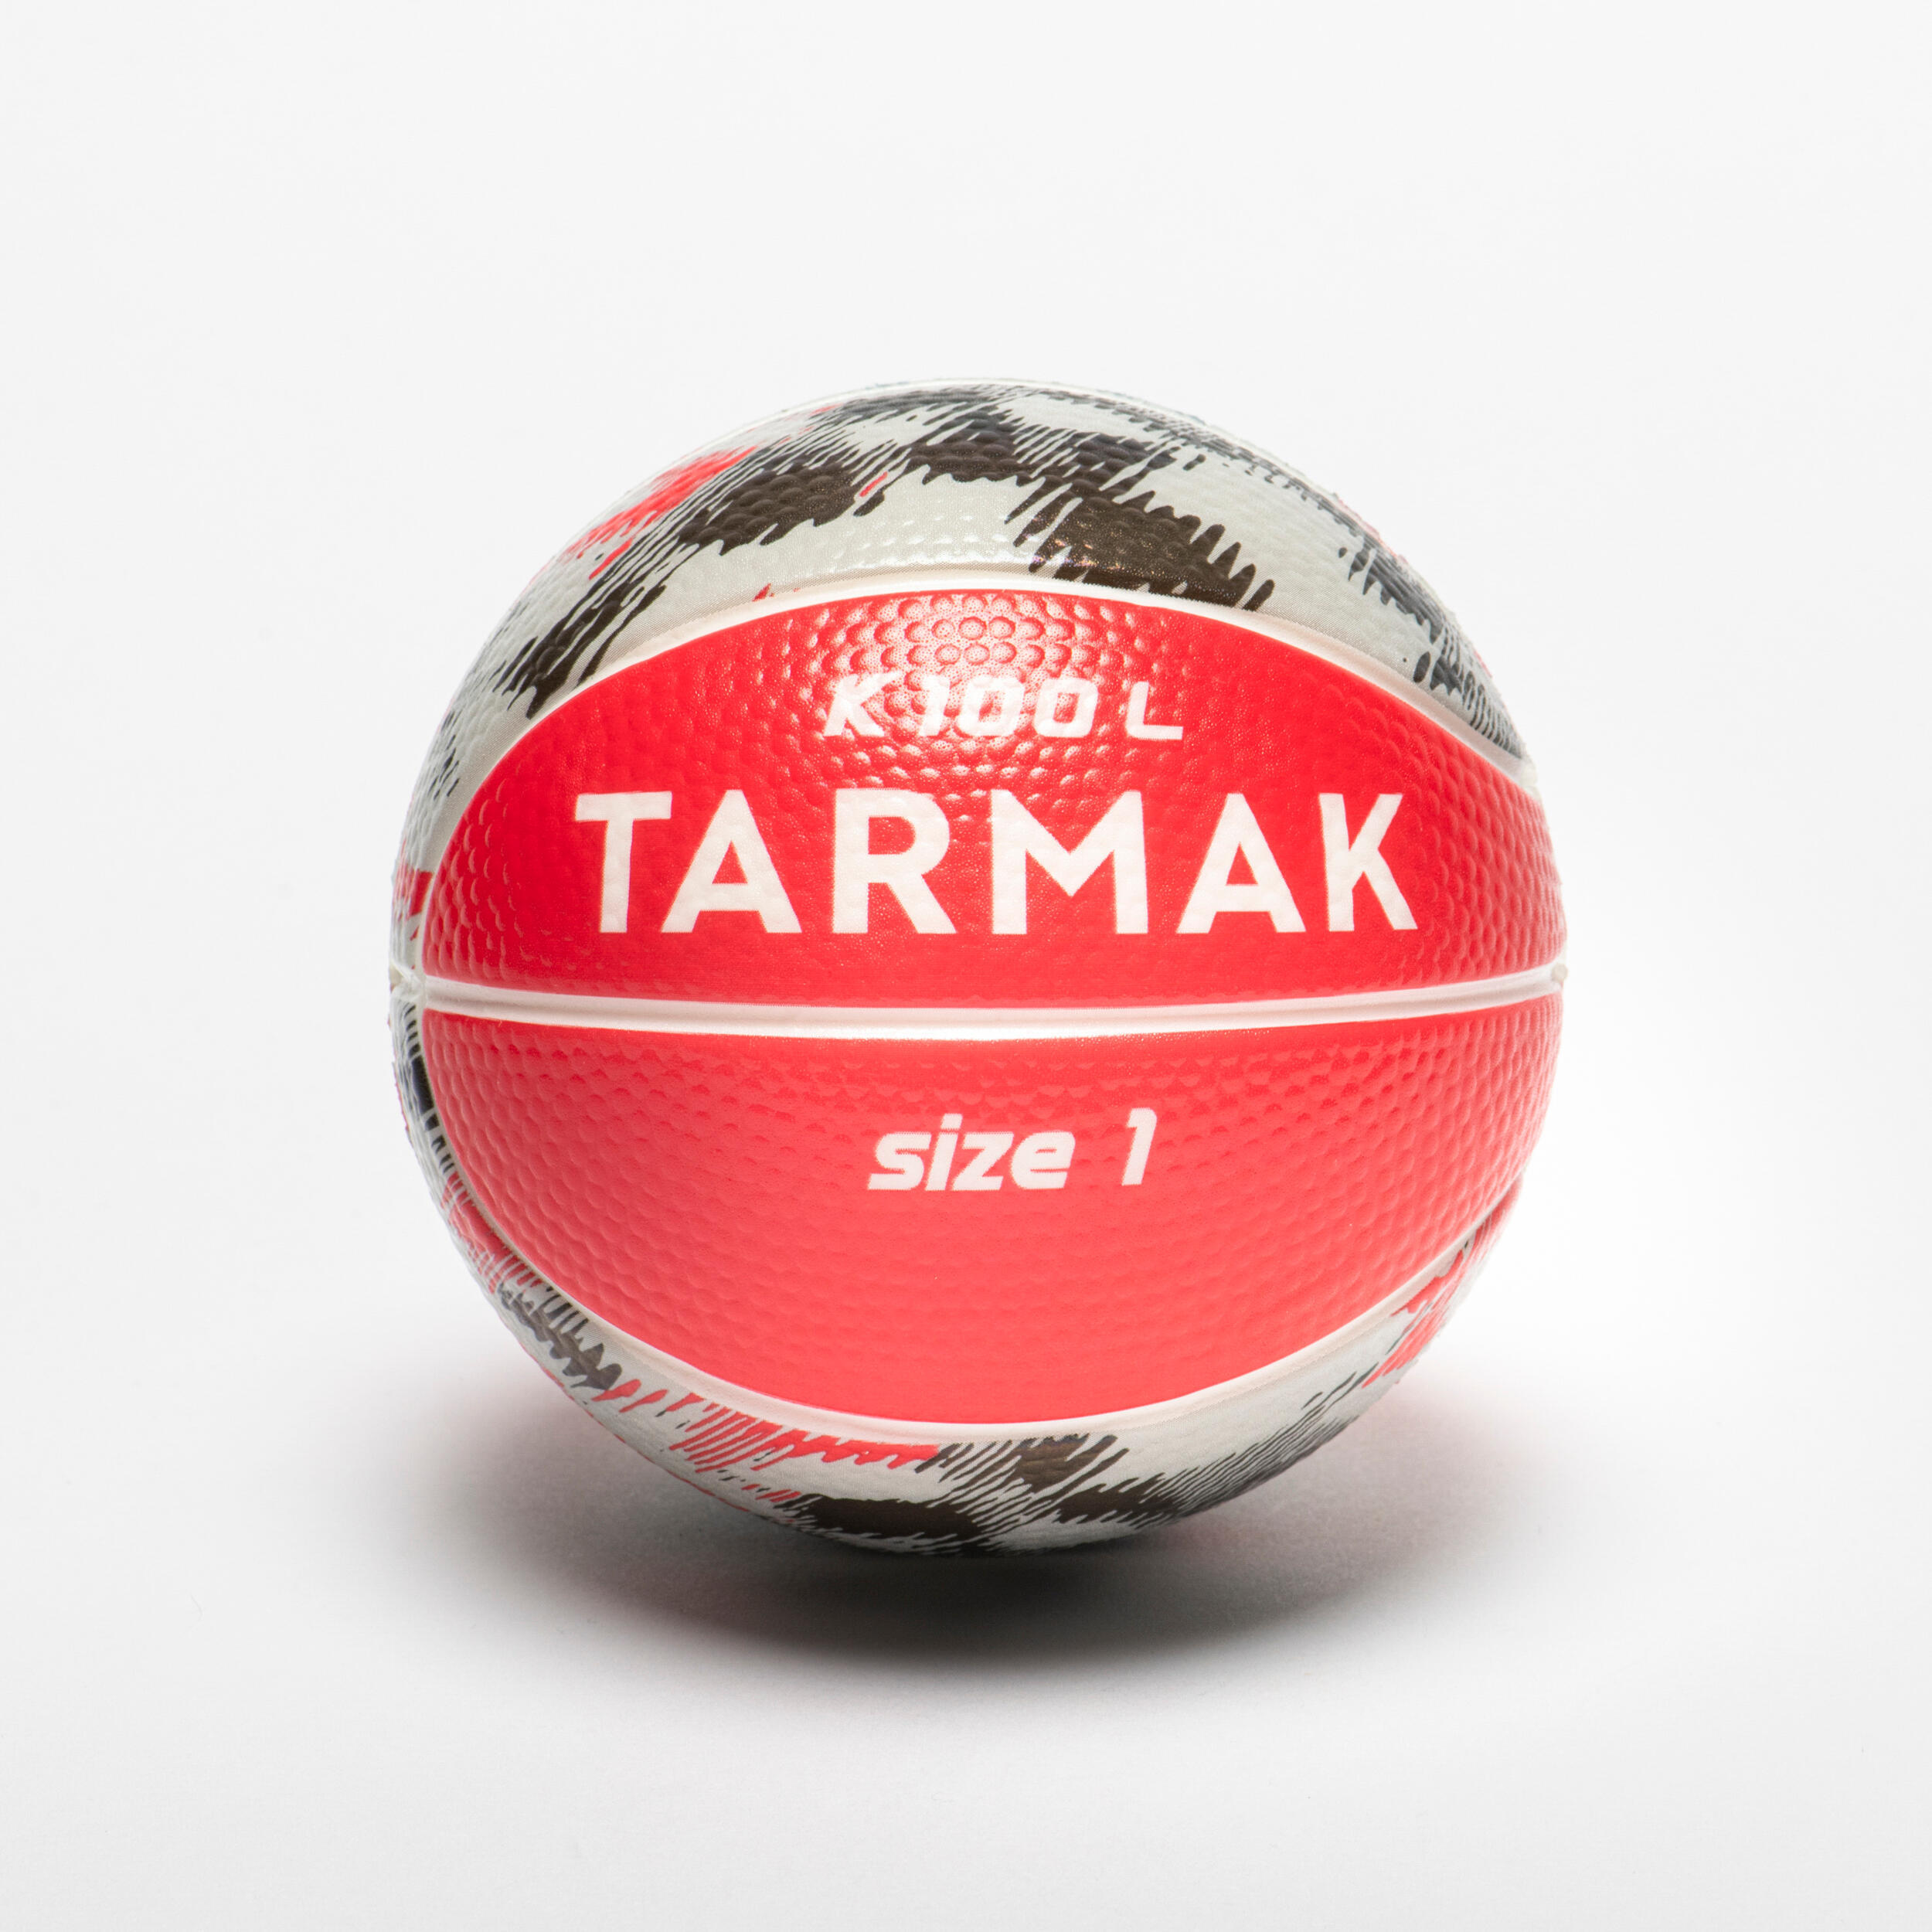 TARMAK Kids' Size 1 Mini Foam Basketball K100 - Red/Grey